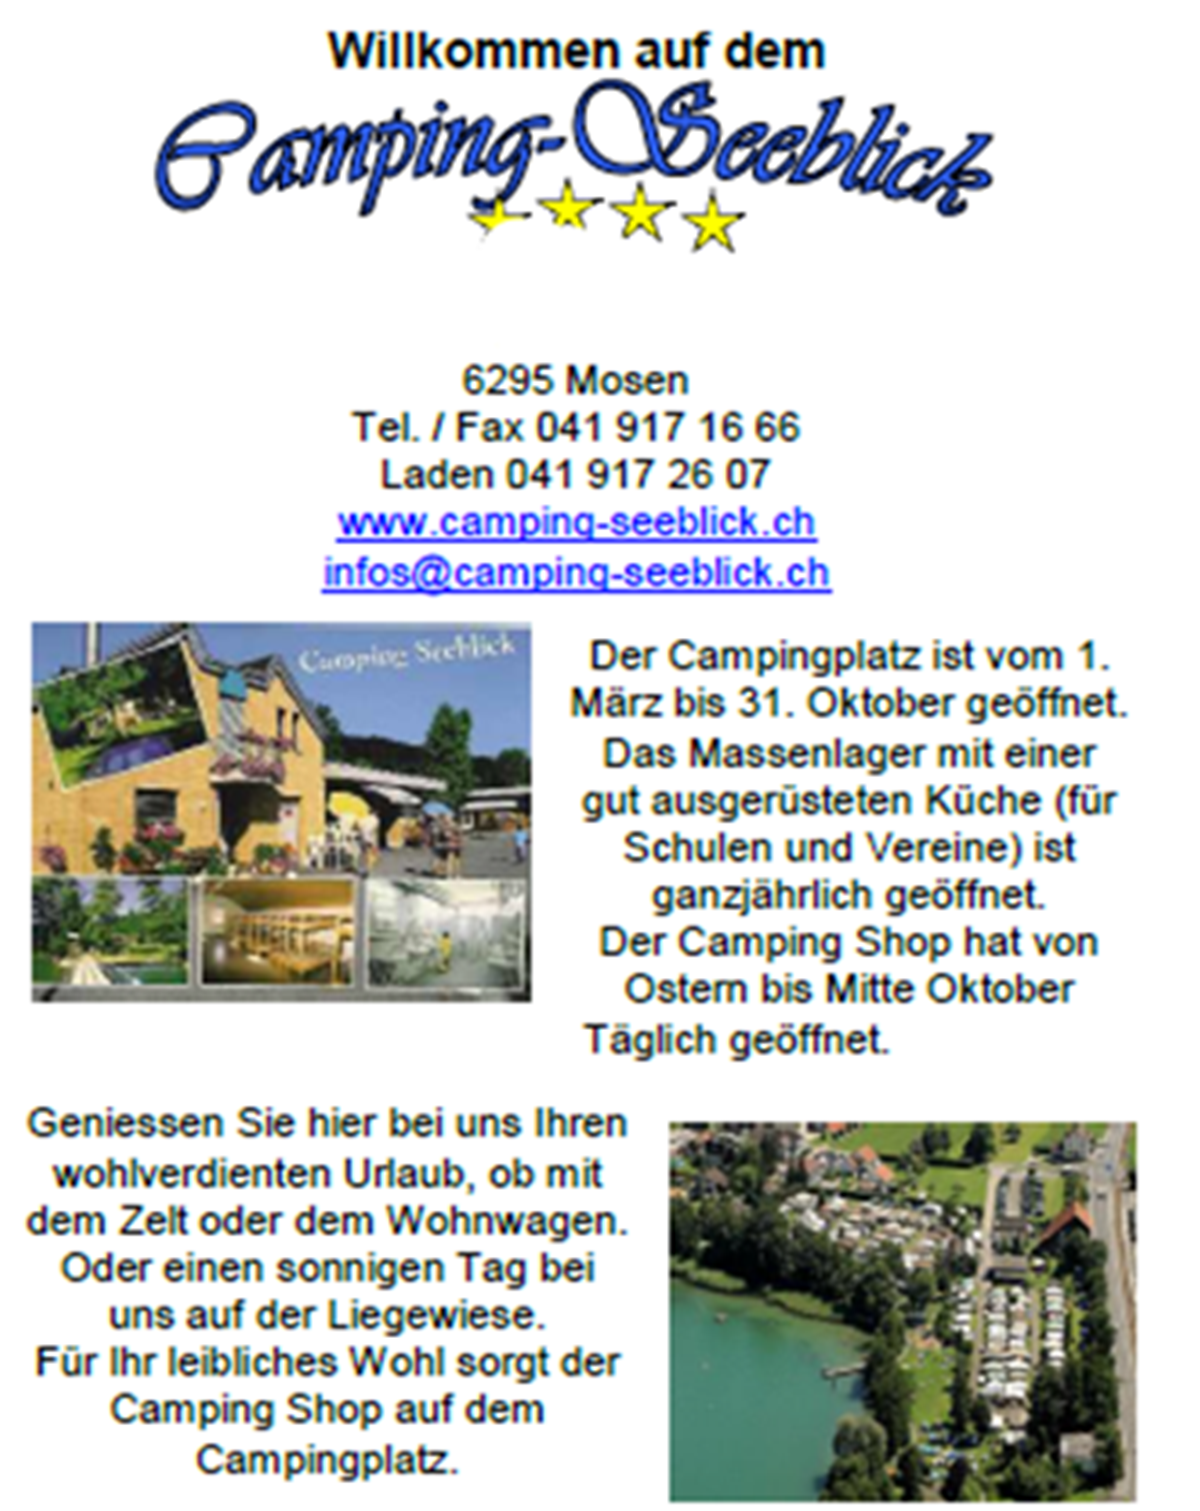 Camping-Seeblick AG Mosen